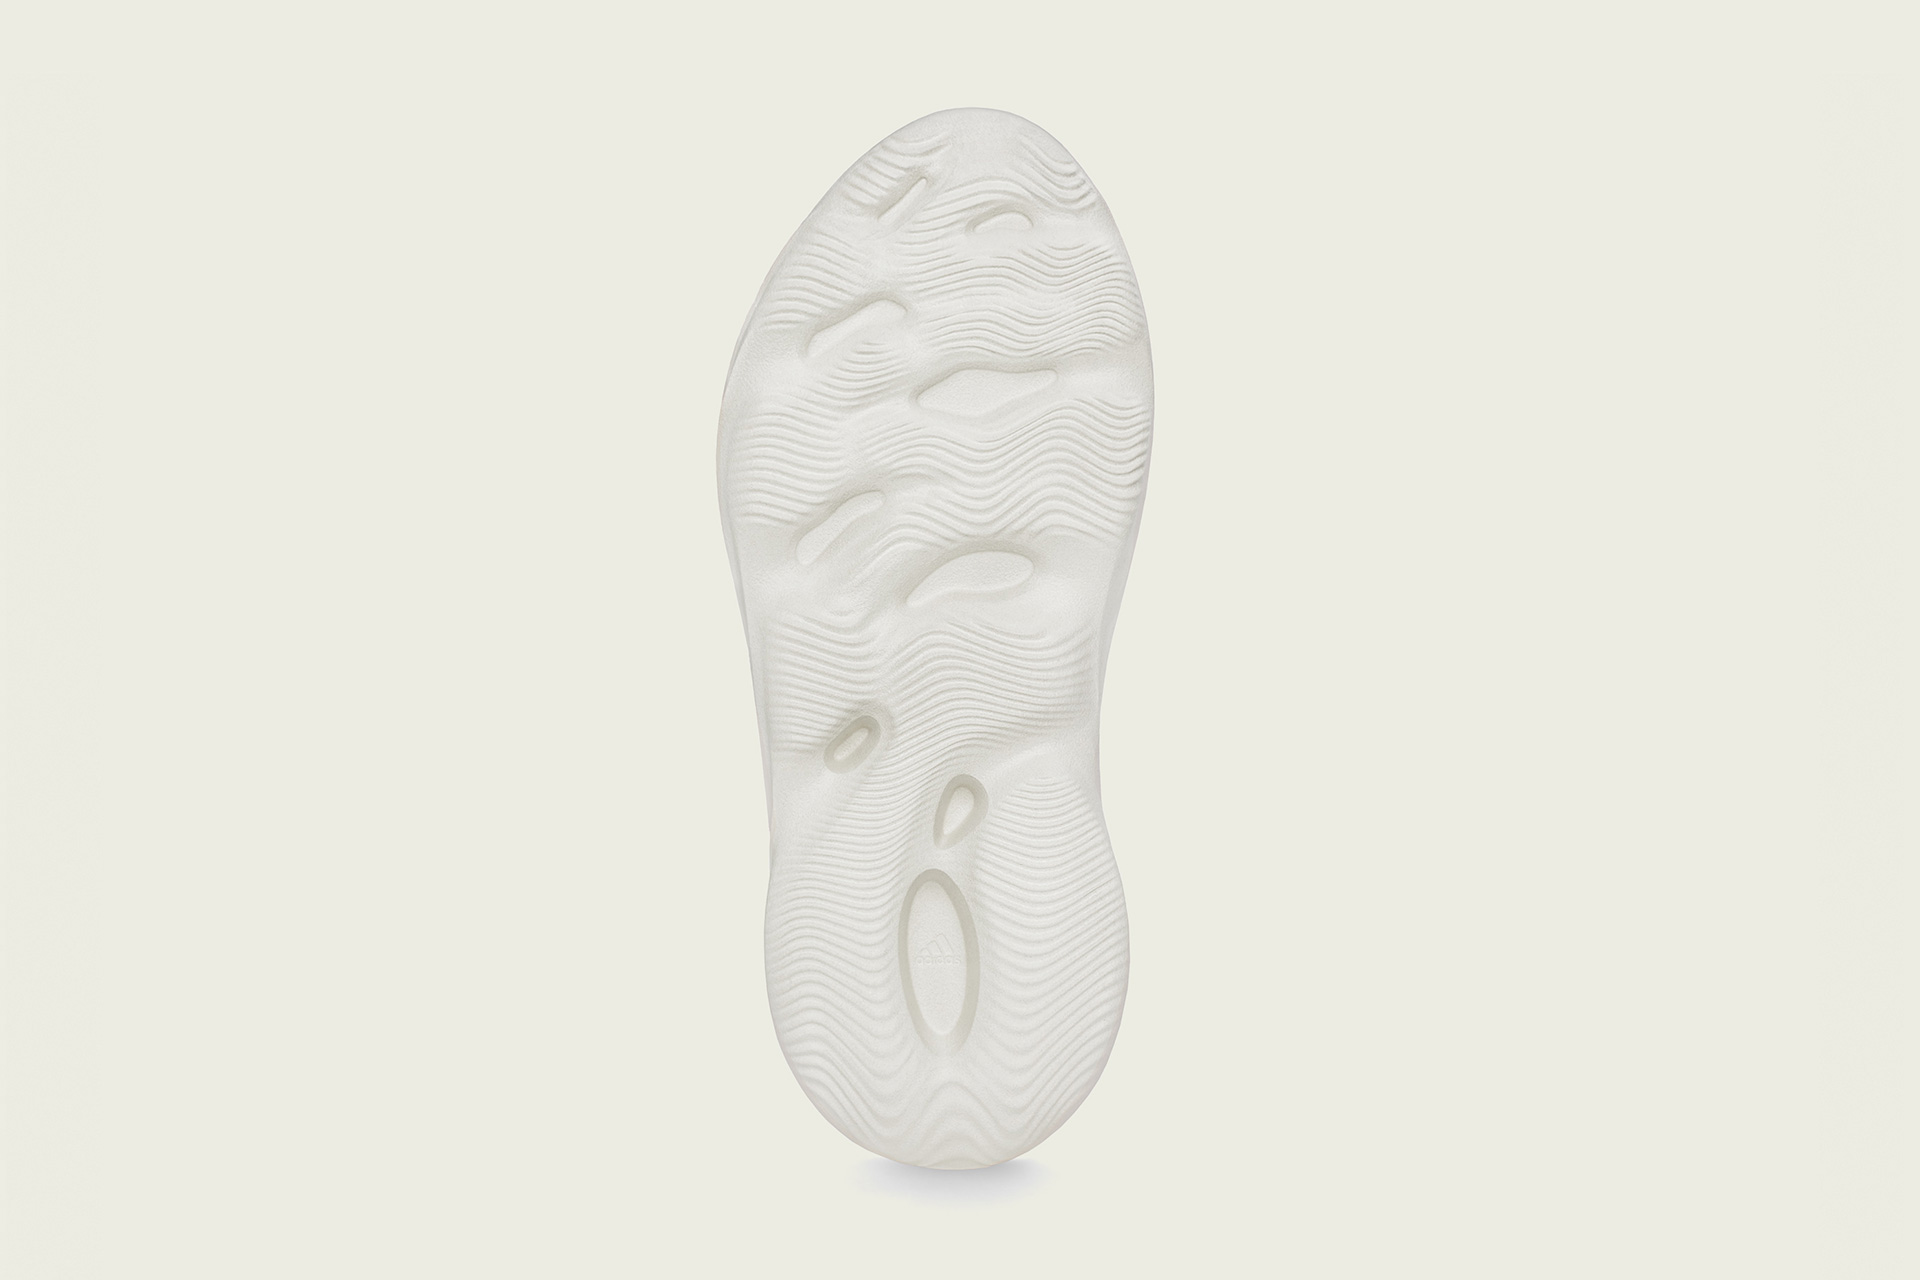 adidas Yeezy Foam Runner - FY4567 - Sand - Footshop - Releases